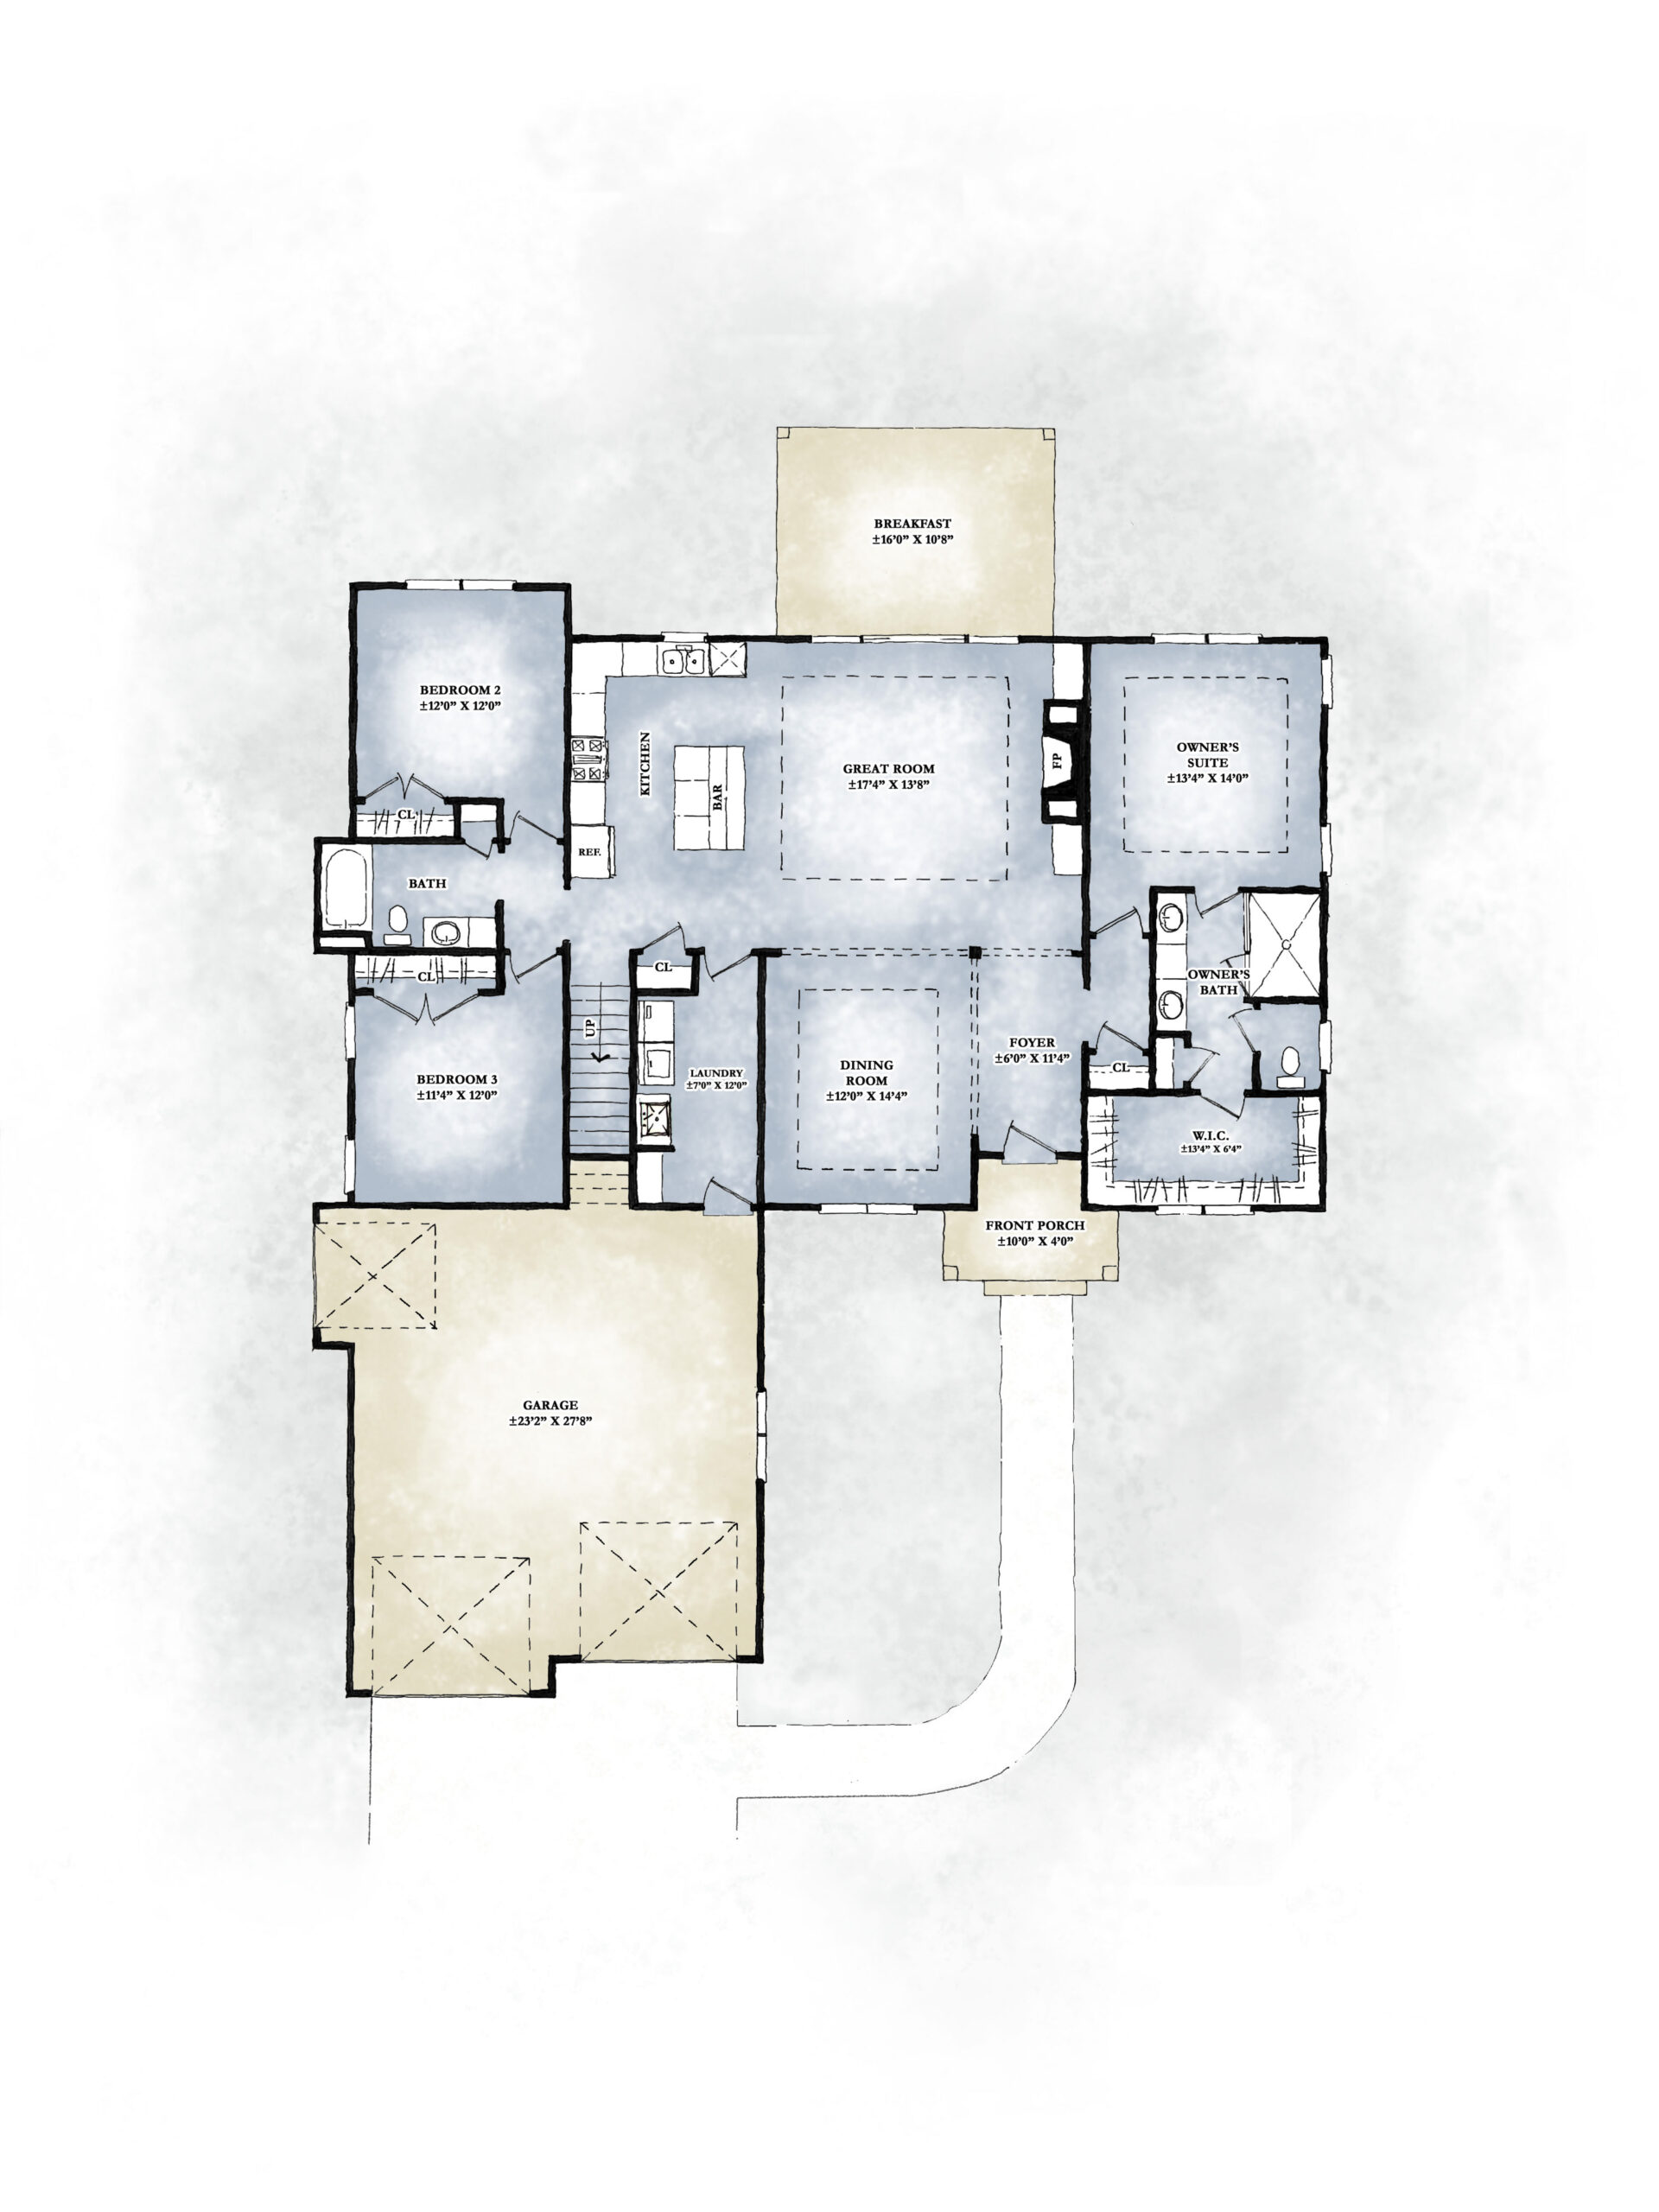 Lot 257 main level floorplan